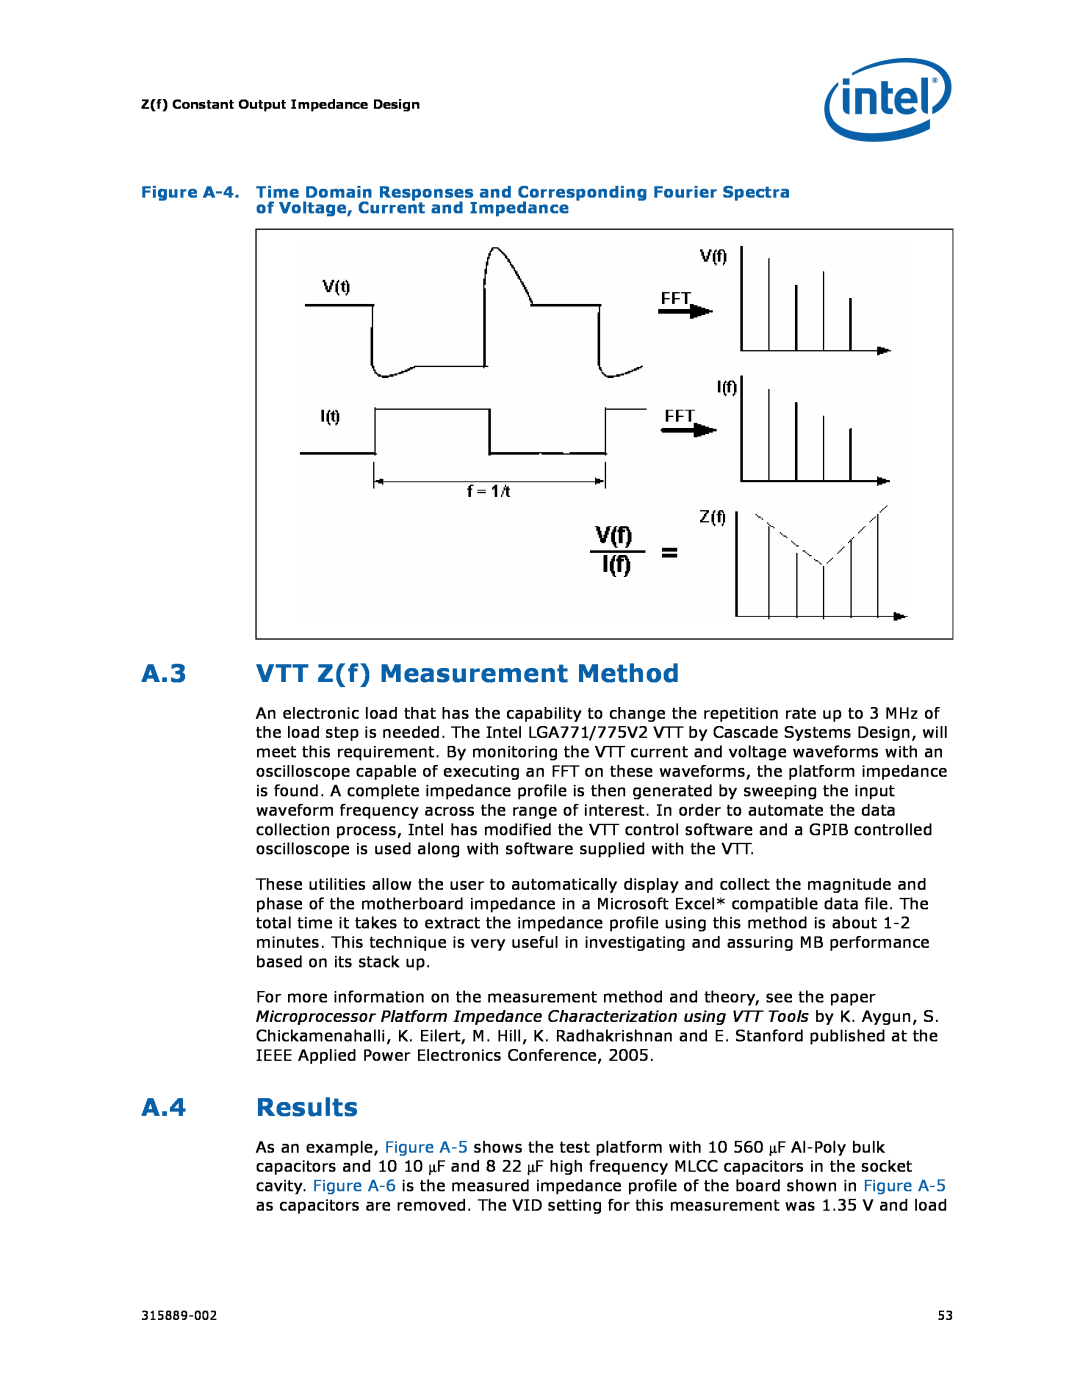 Intel 315889-002 manual A.3 VTT Zf Measurement Method, A.4 Results 